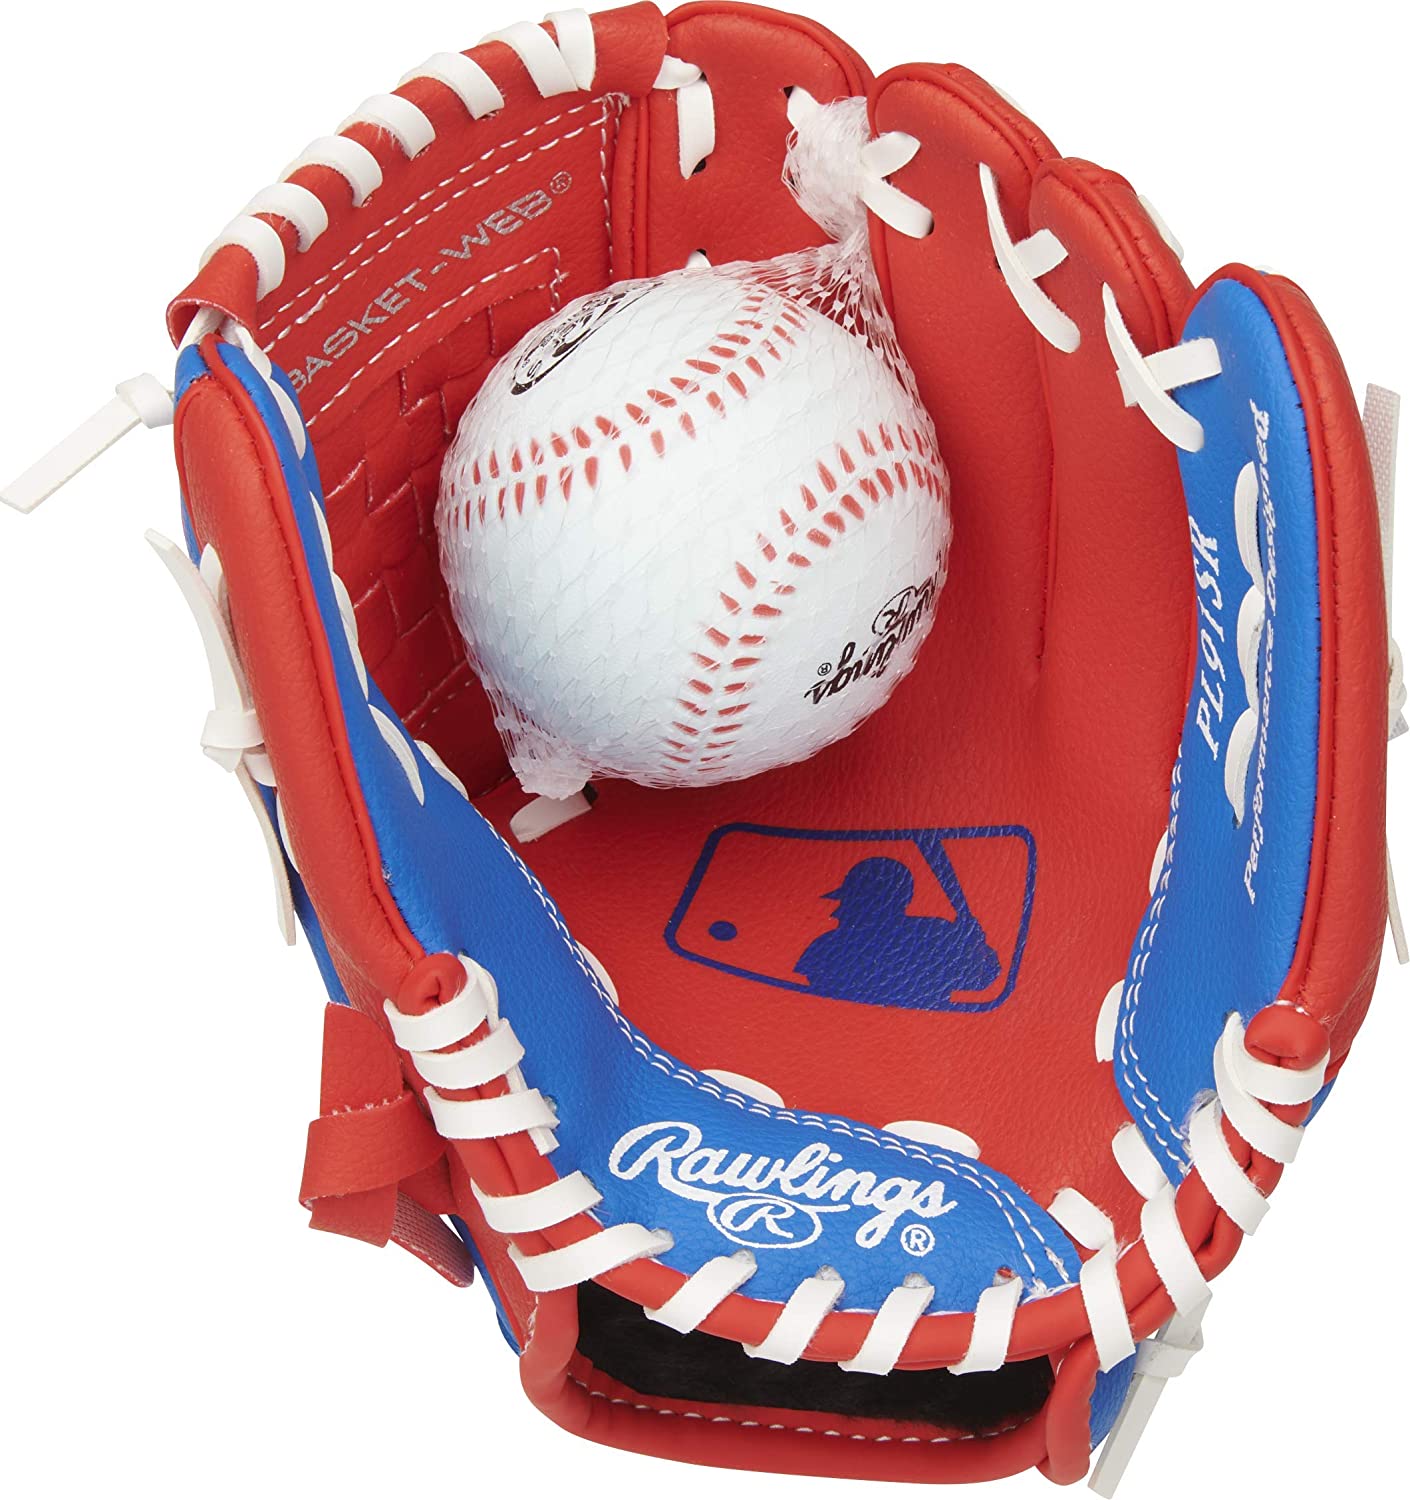 Rawlings Players Series Youth Tball/Baseball Gloves